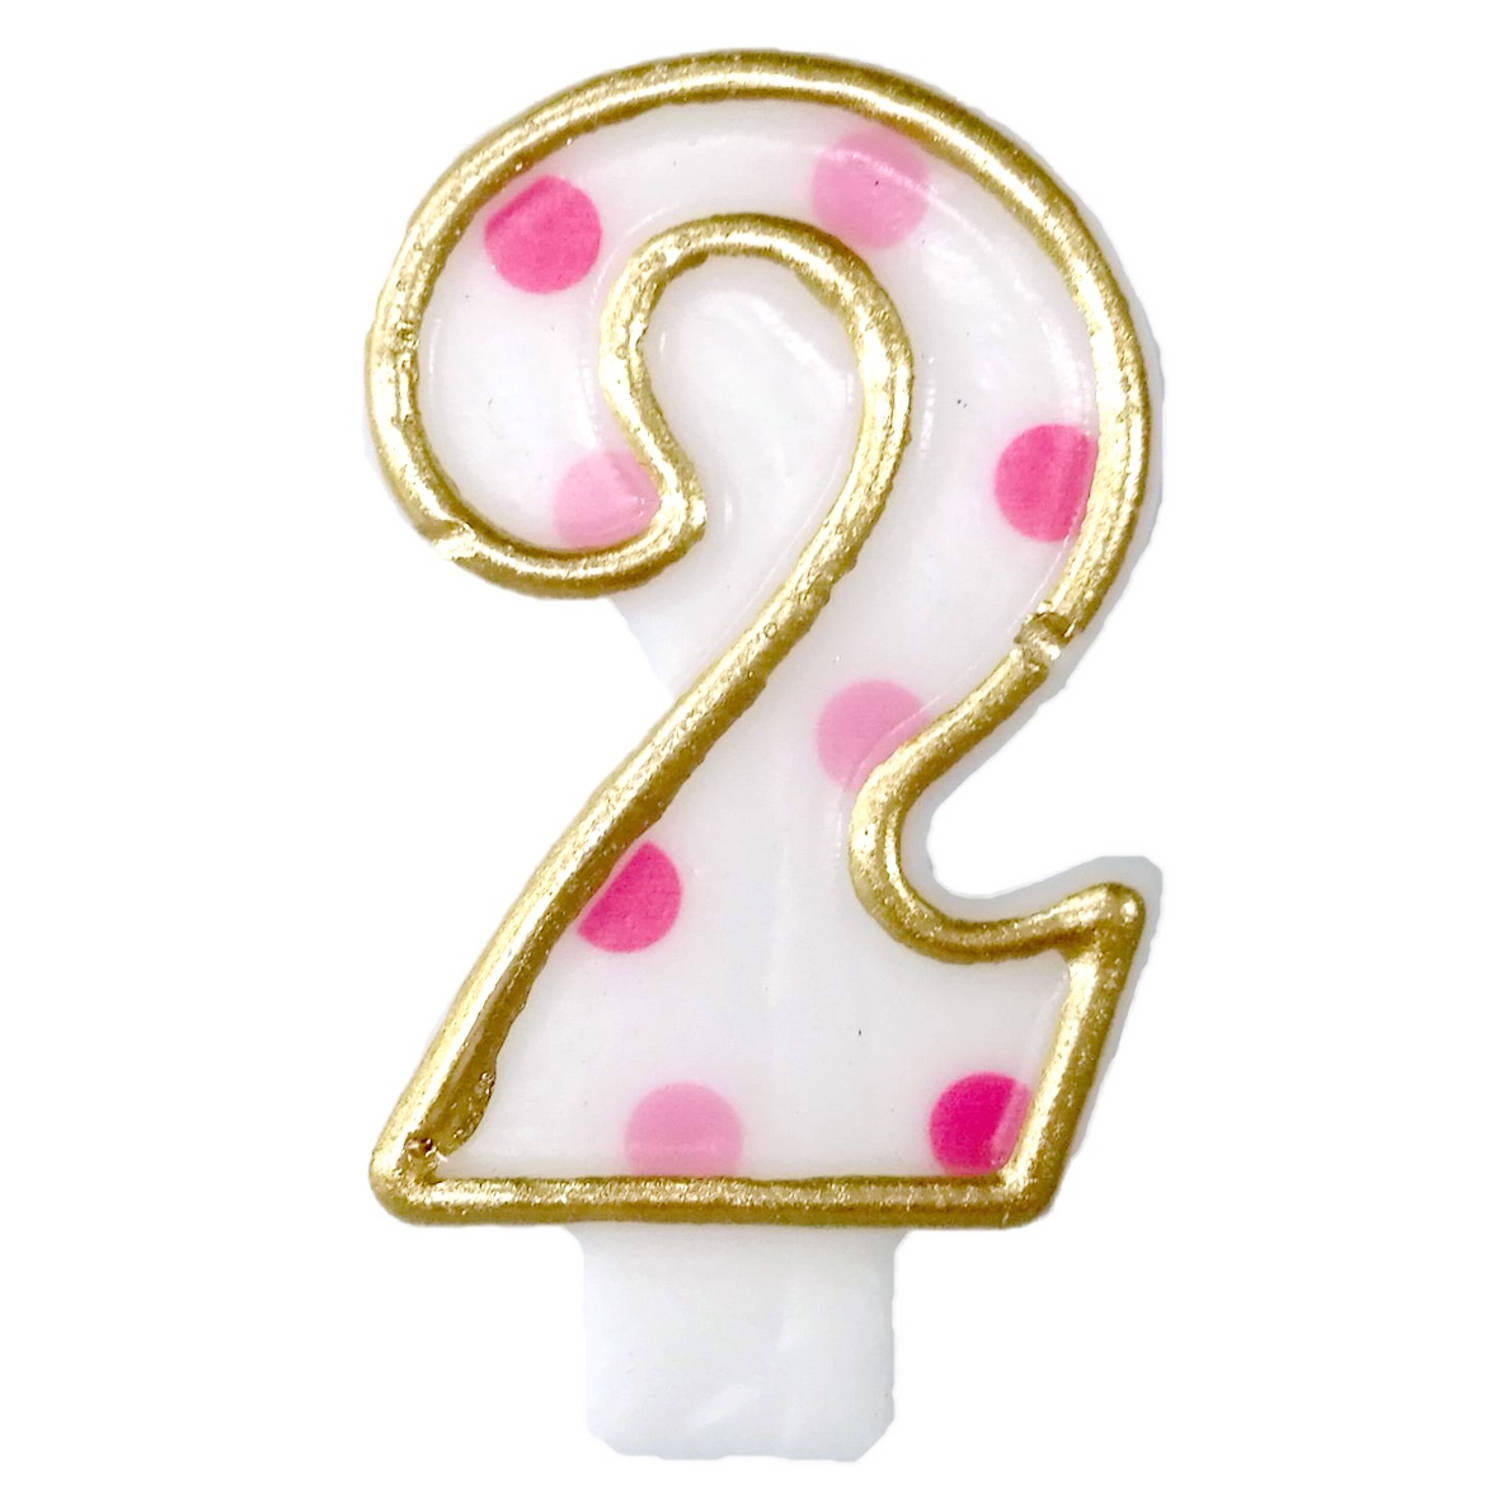 Haza Original verjaardagskaars cijfer 2 goud-roze 6 cm